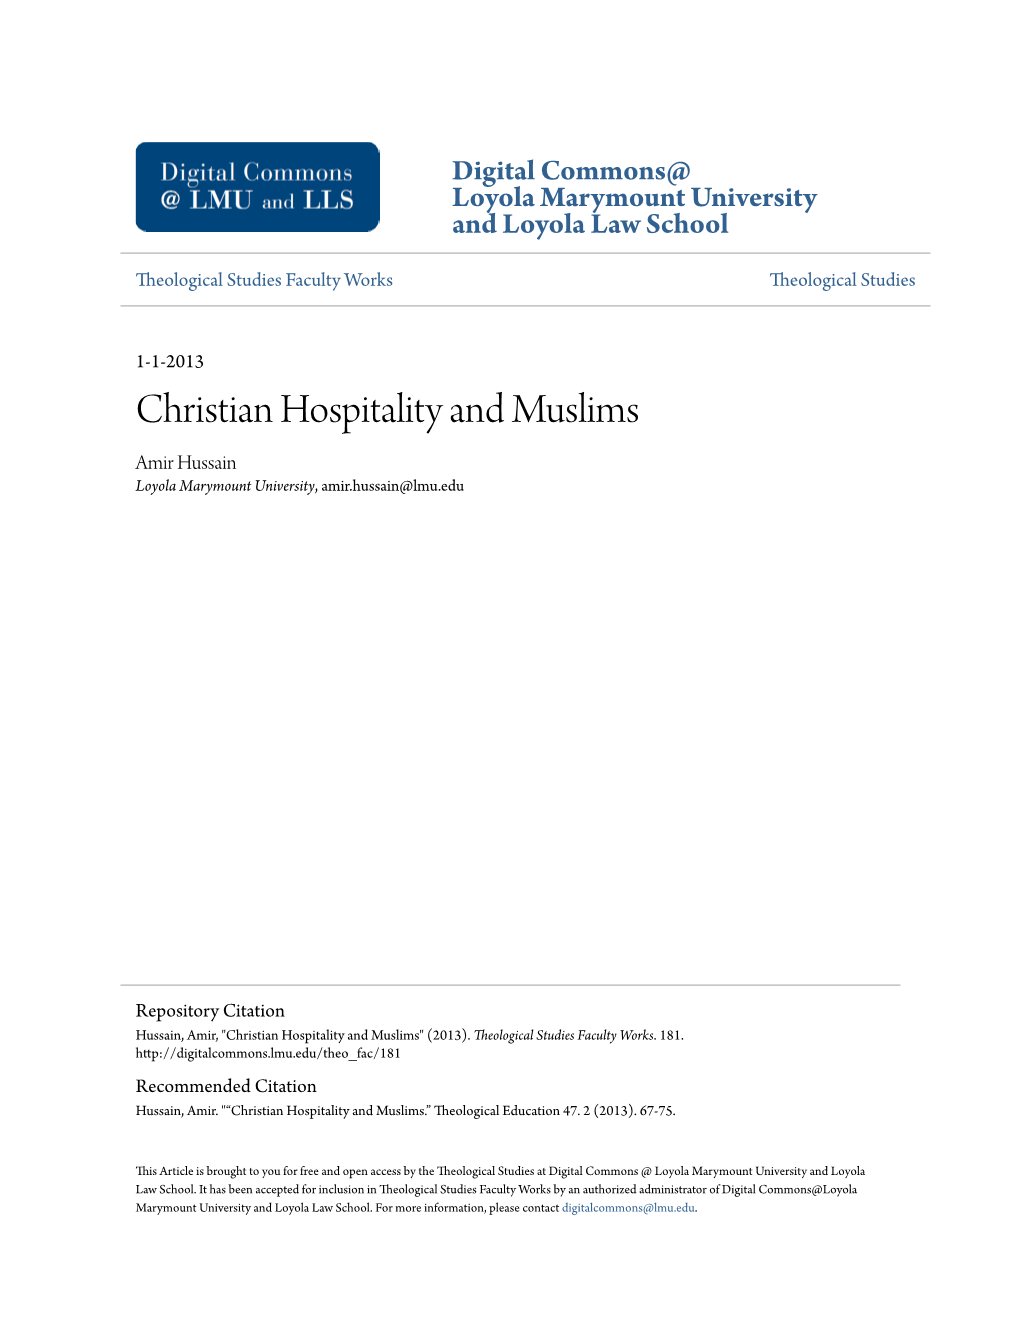 Christian Hospitality and Muslims Amir Hussain Loyola Marymount University, Amir.Hussain@Lmu.Edu